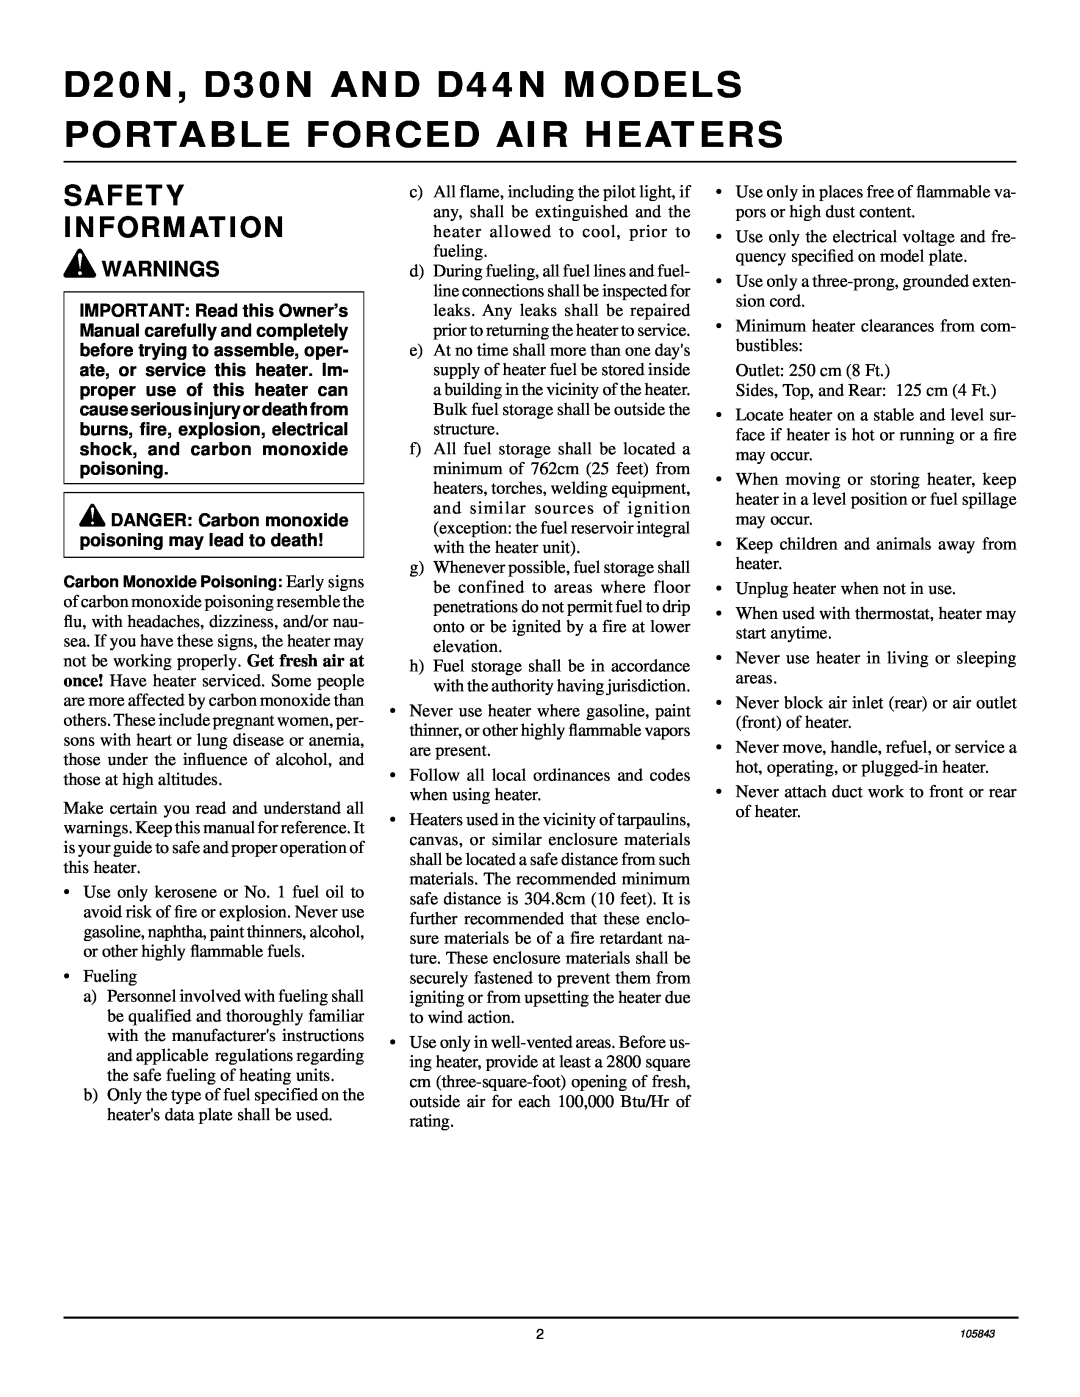 Desa D30N, D20N, D44N owner manual Safety Information, Warnings 